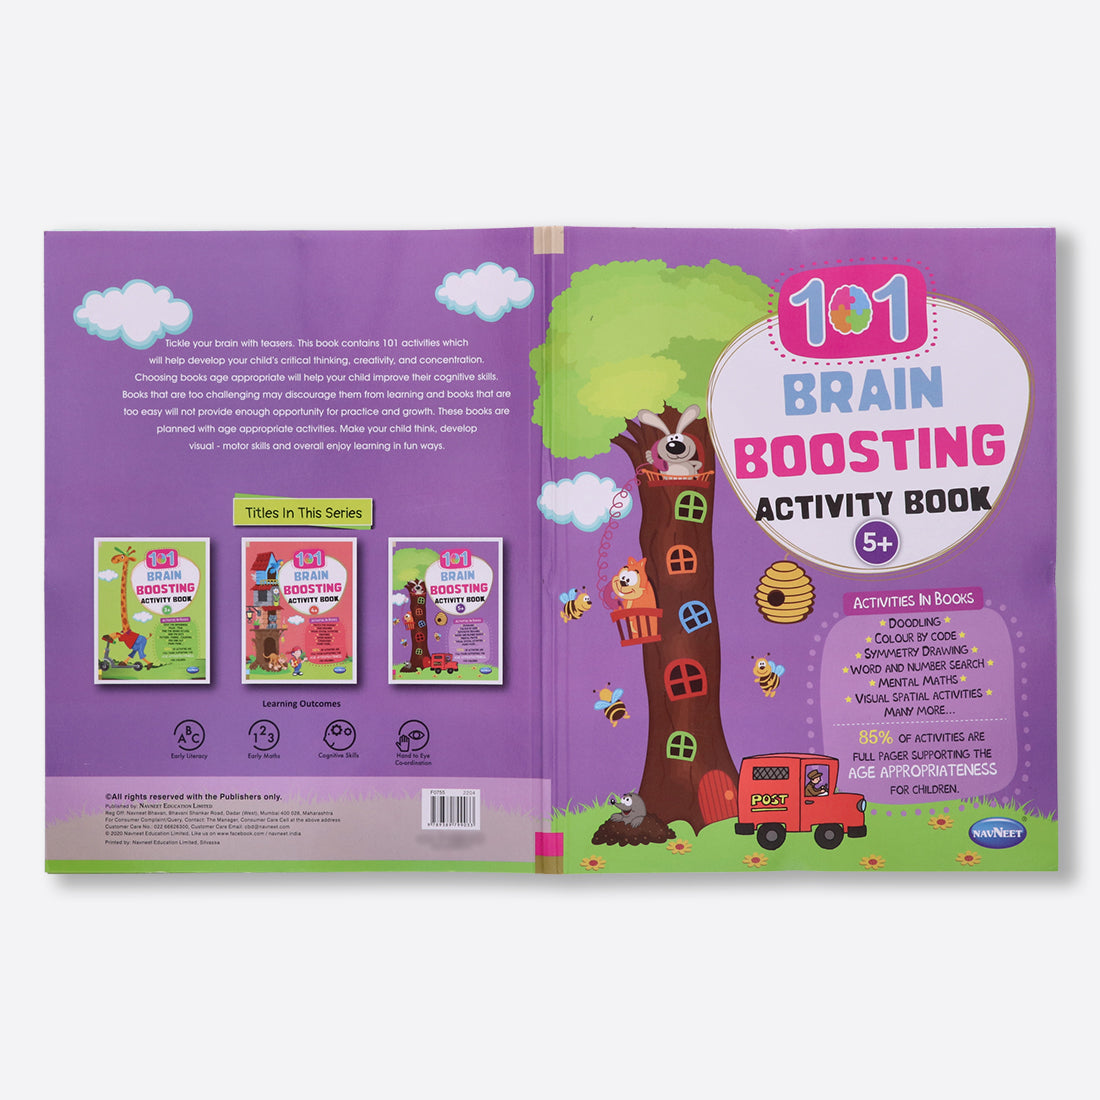 Navneet 101 Brain Boosting Activity Book -Preschool Kids- Age 5+, Logical reasoning, Best Brain teaser book- Fun activities like Doodling, Mental Maths, Colour by Code & more